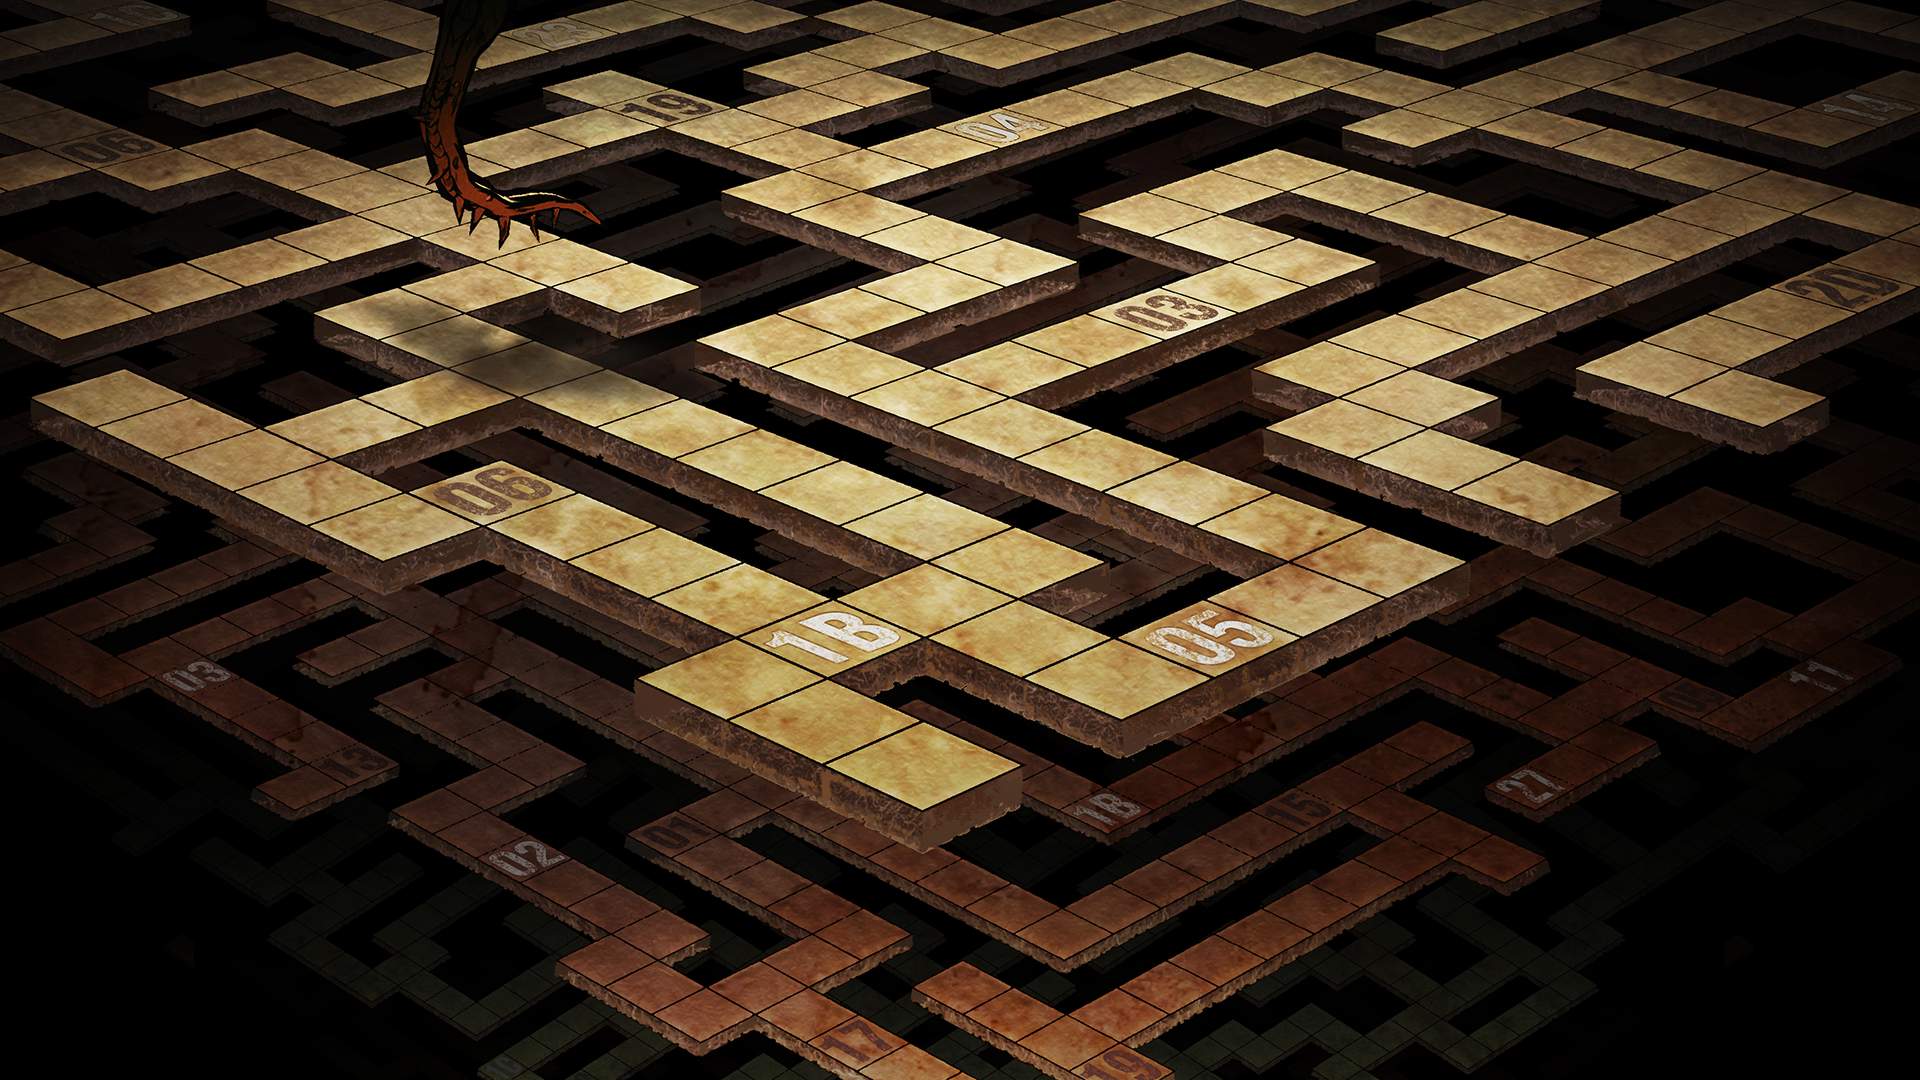 www.square-enix-games.com